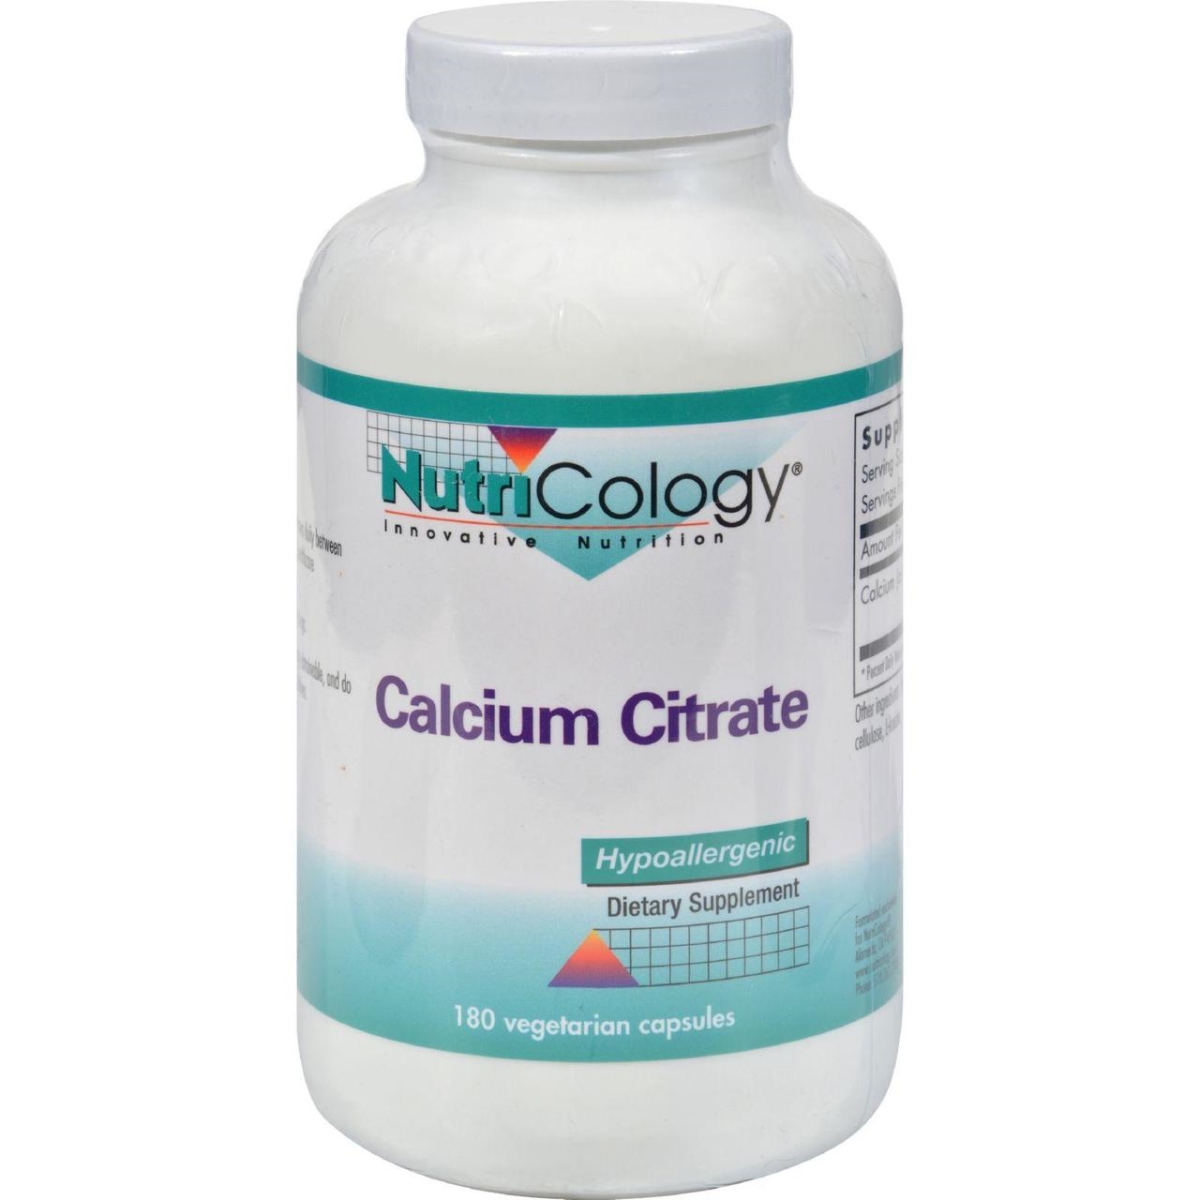 Hg0524736 150 Mg Calcium Citrate - 180 Capsules